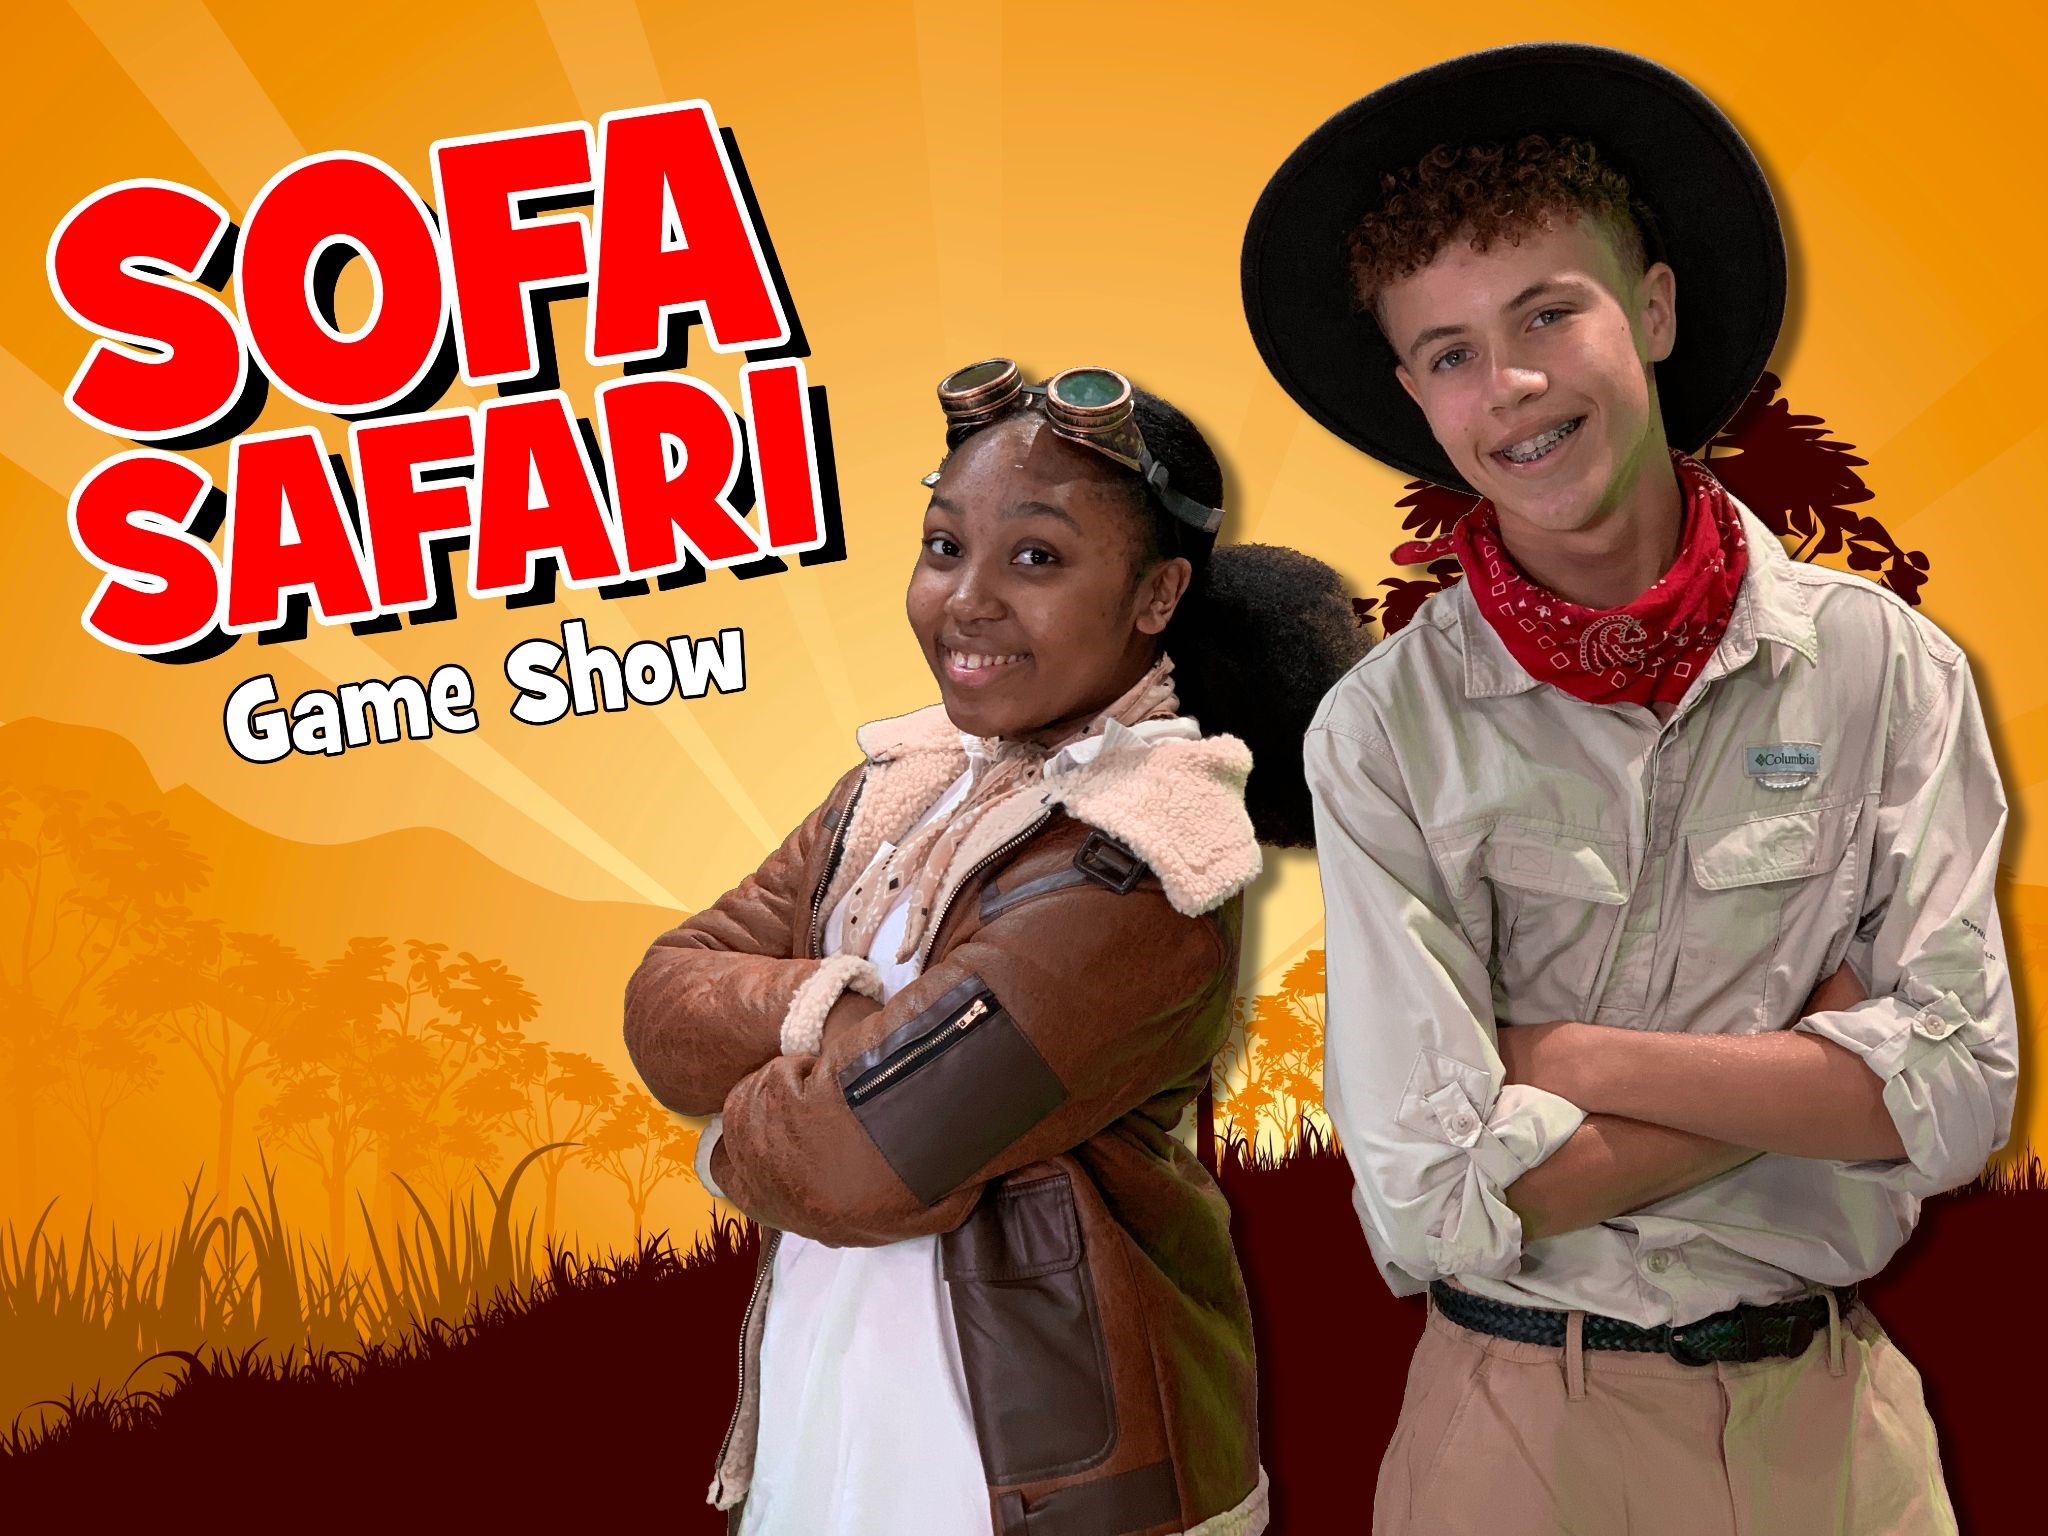 The Sofa Safari Game Show